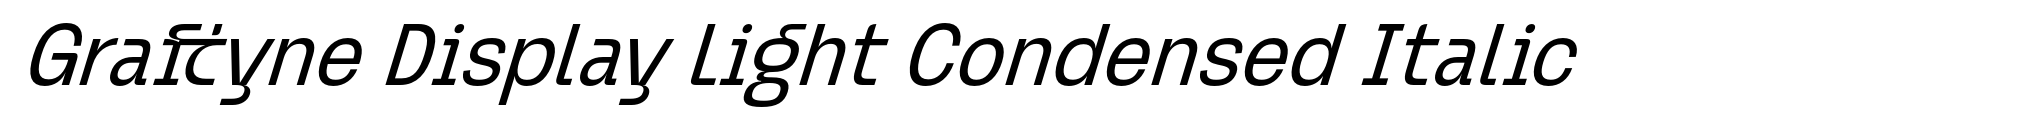 Graftyne Display Light Condensed Italic image